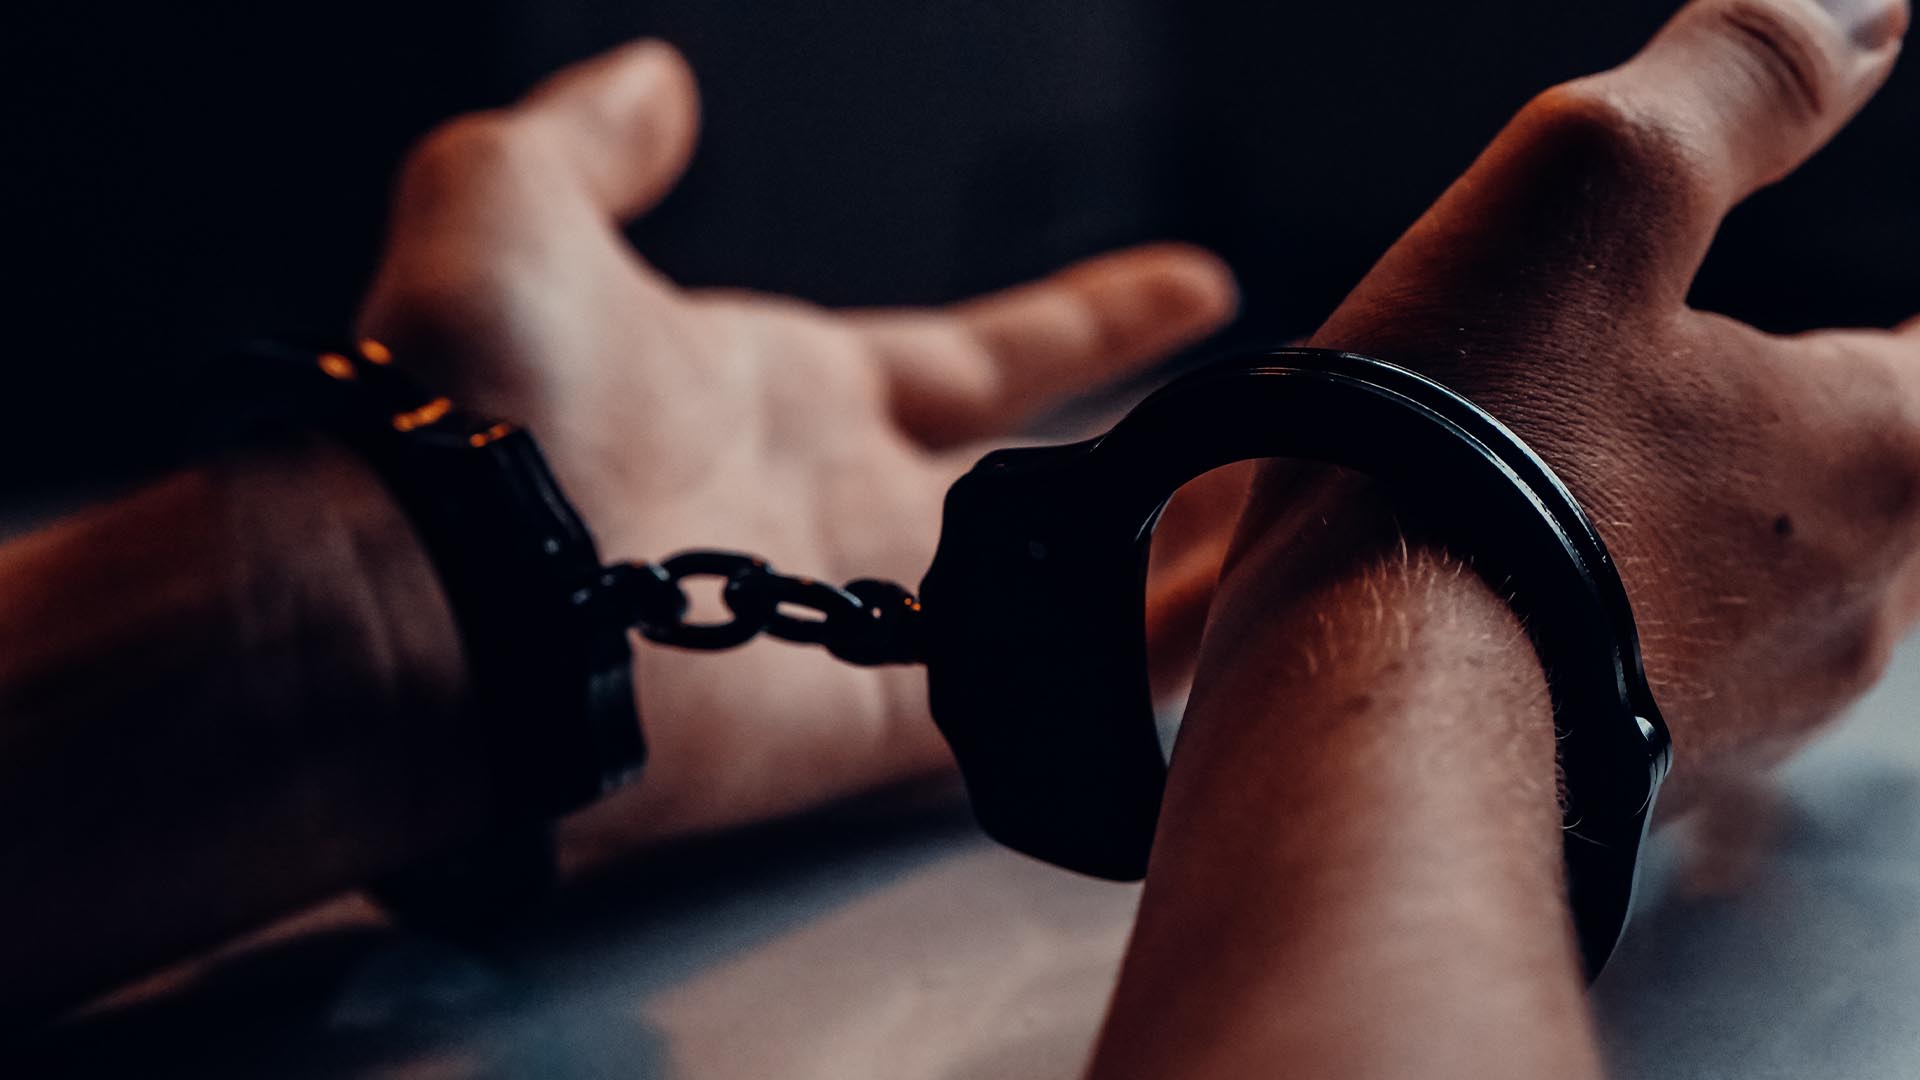 wrists in handcuffs